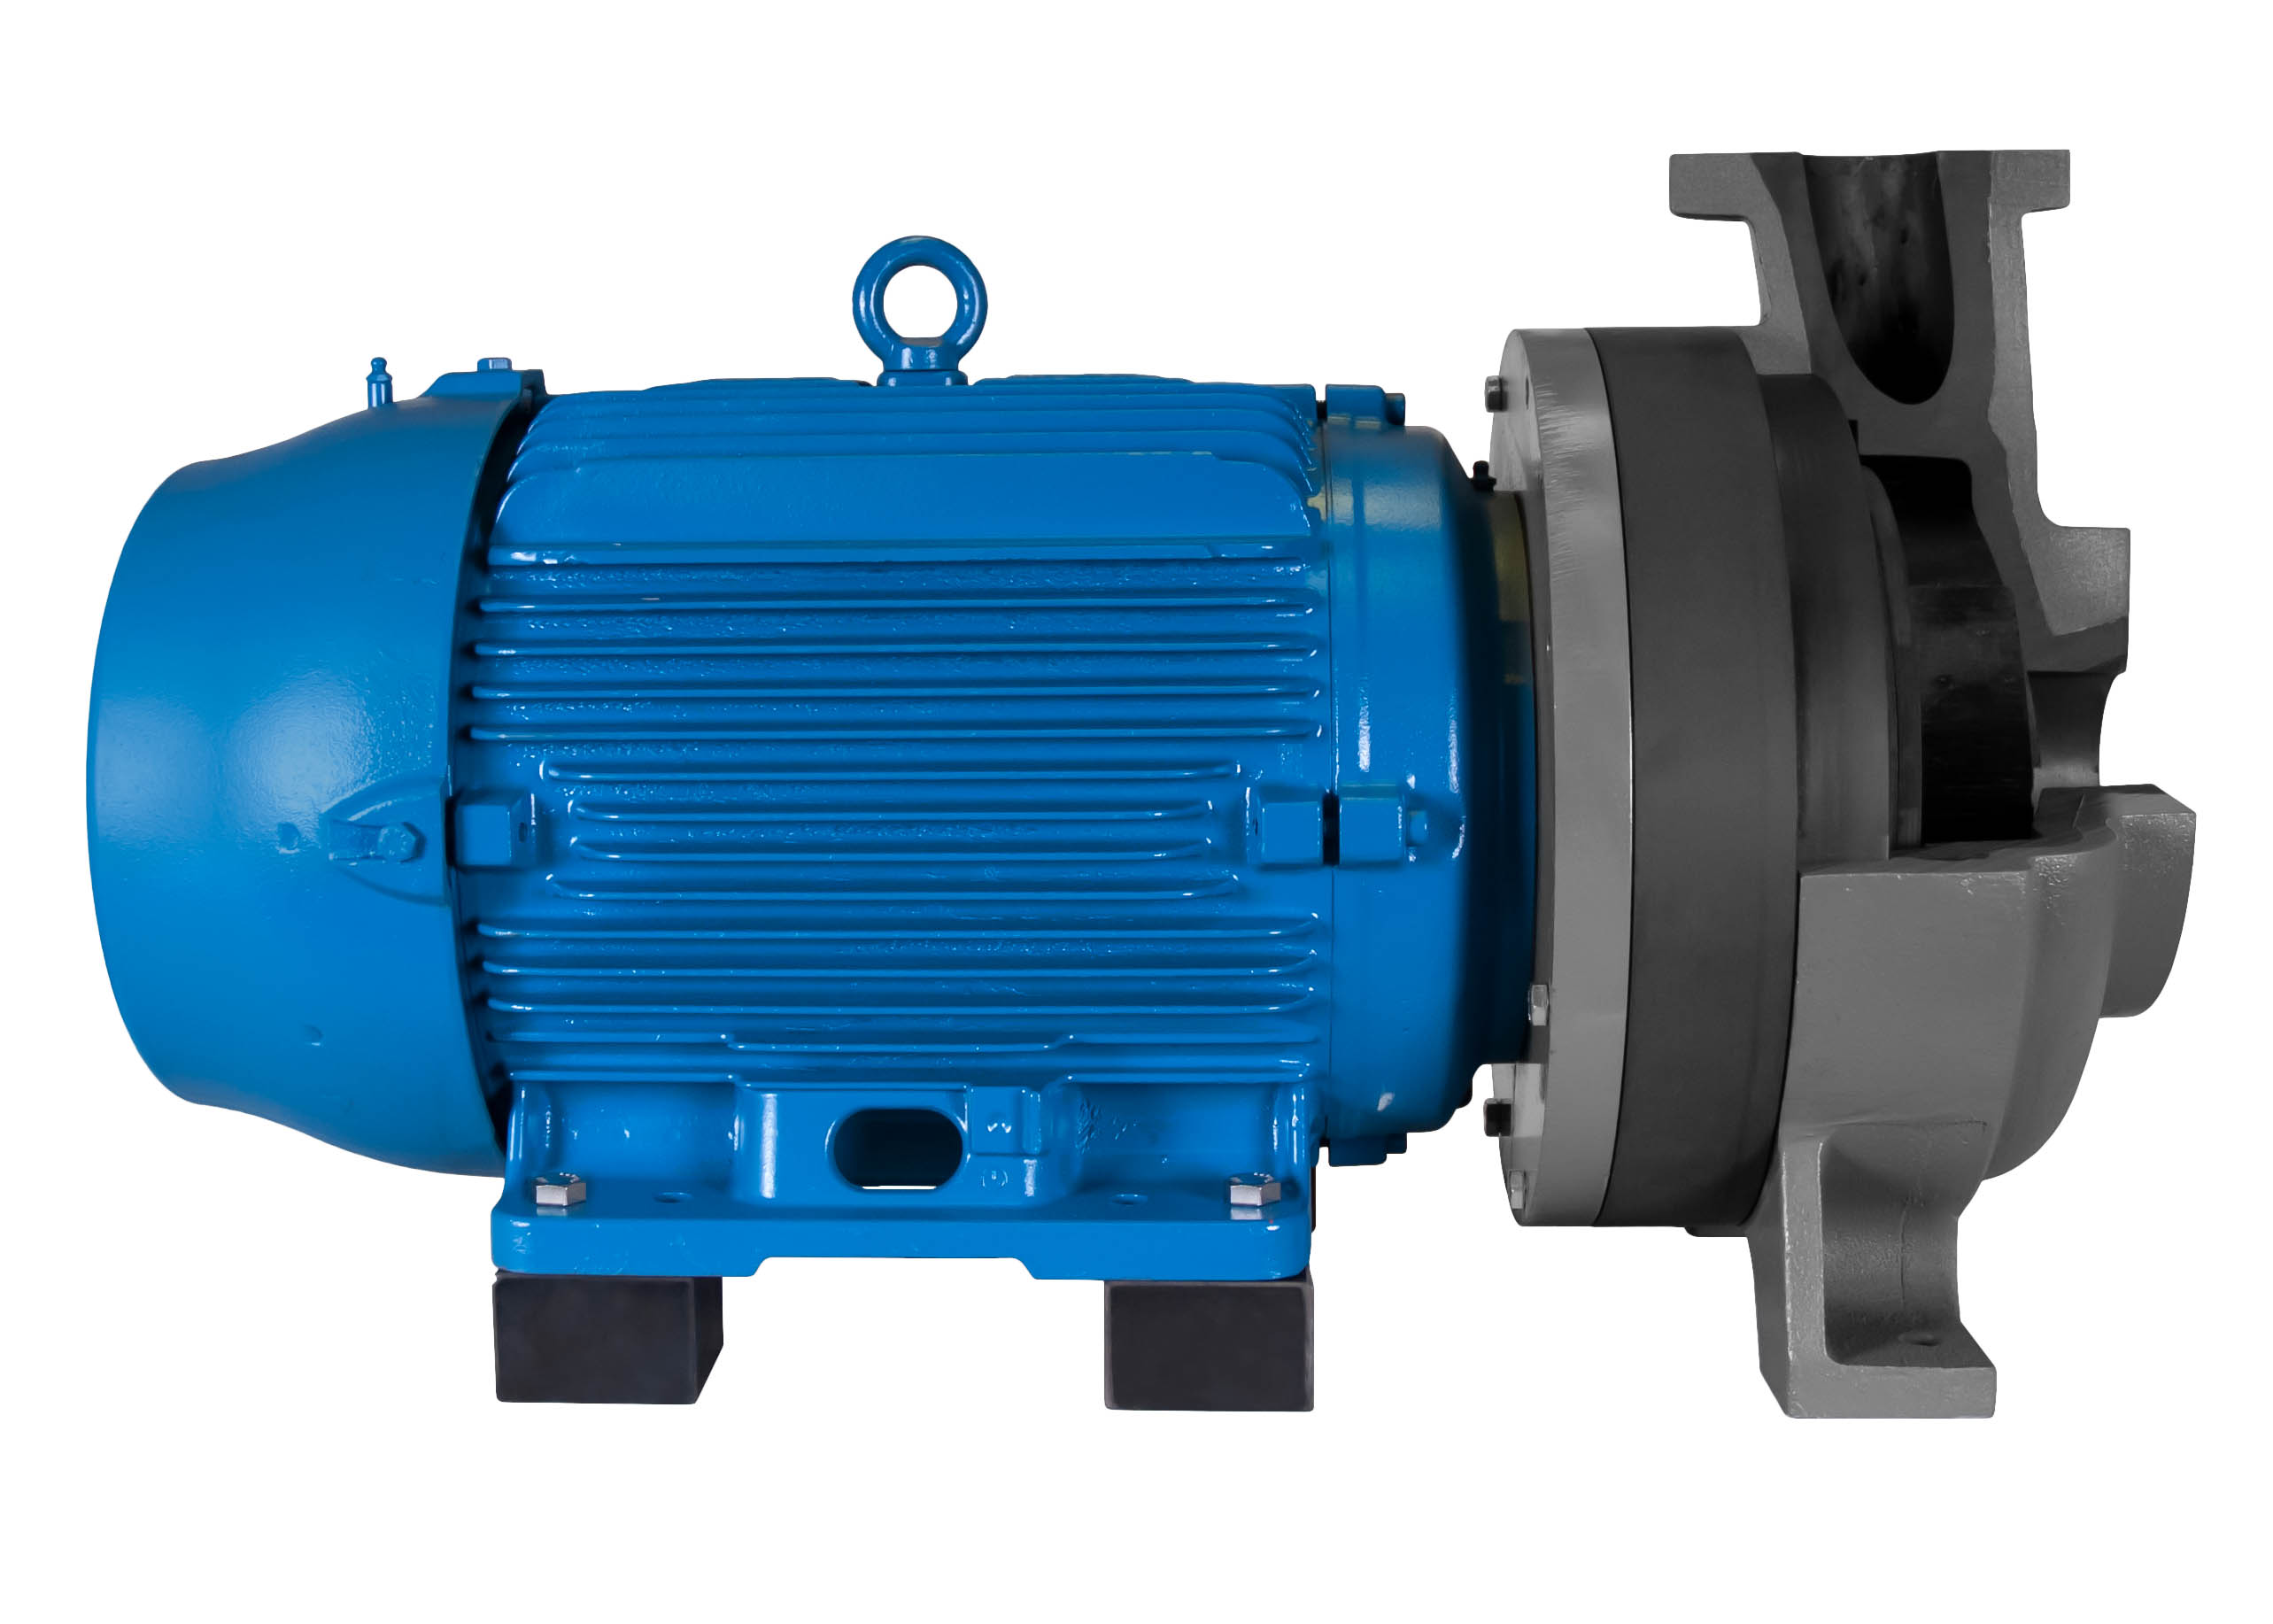 C-Shell 3x2-10 펌프 컷 어웨이 (파란색 WEG 모터 포함) 왼쪽보기